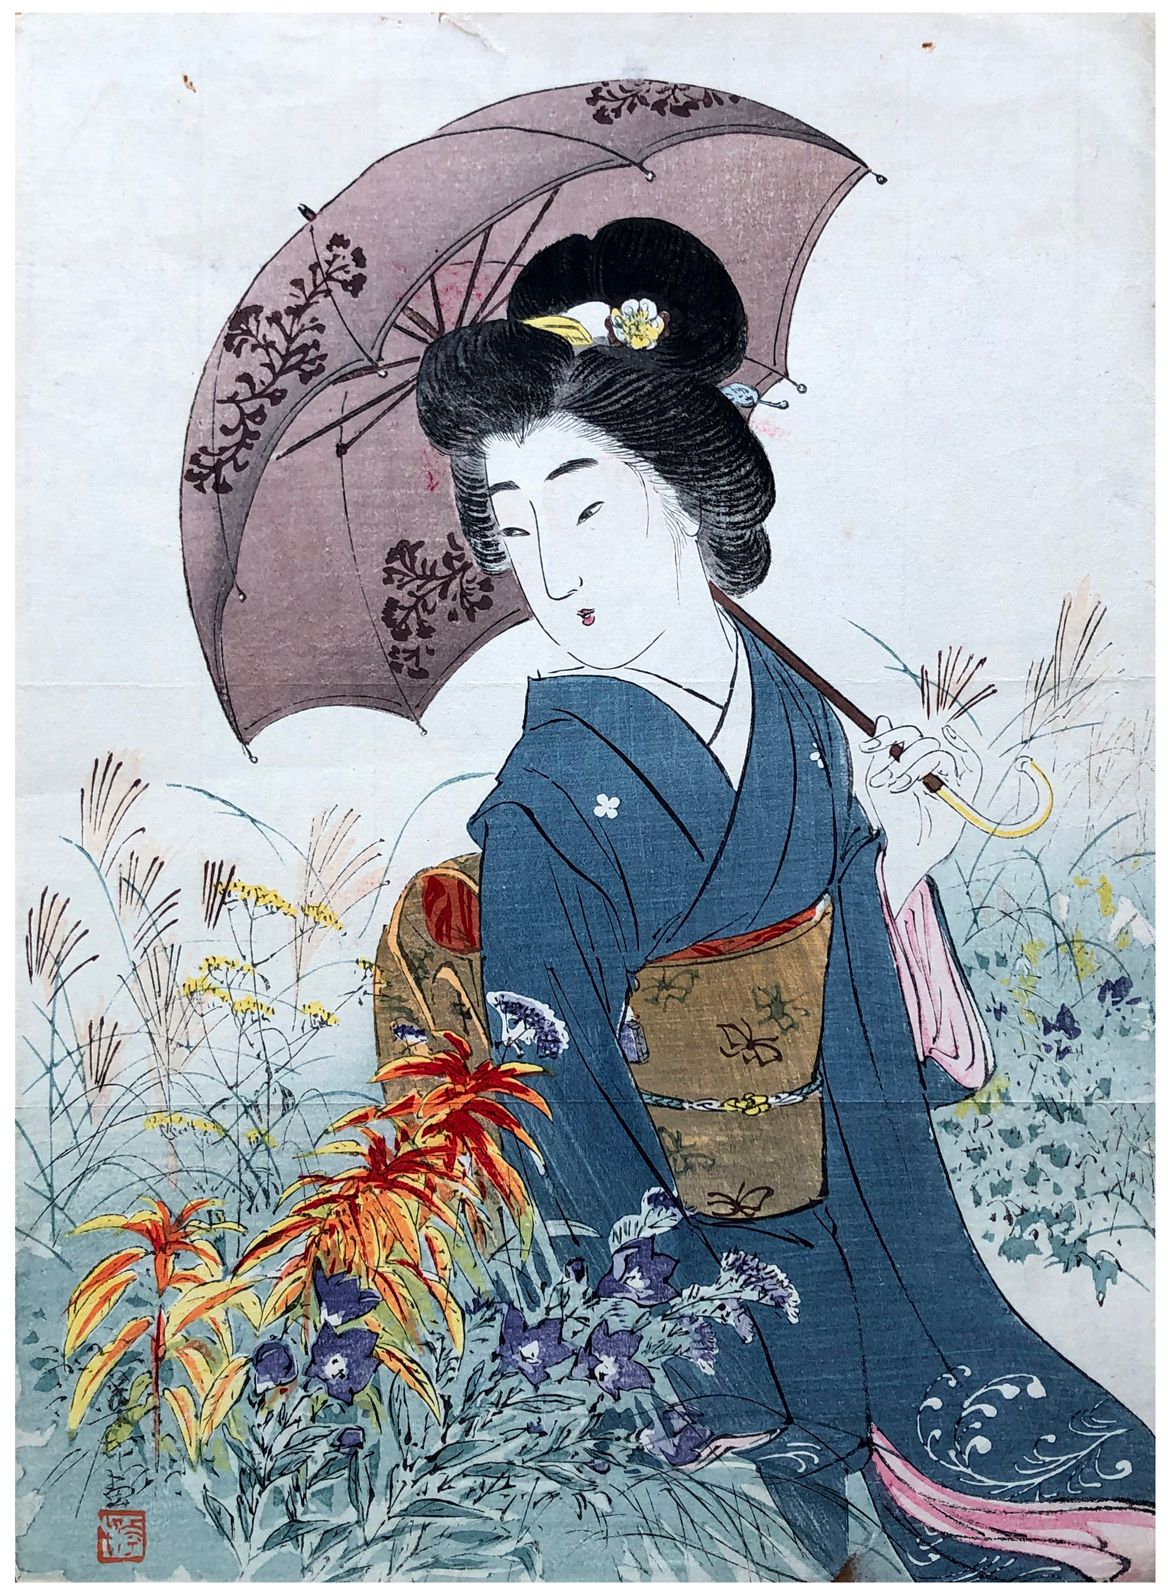 Japanese Woodblock Print by Suzuki Kason Bijin in Autumn Garden 
Small loss in t&hellip;